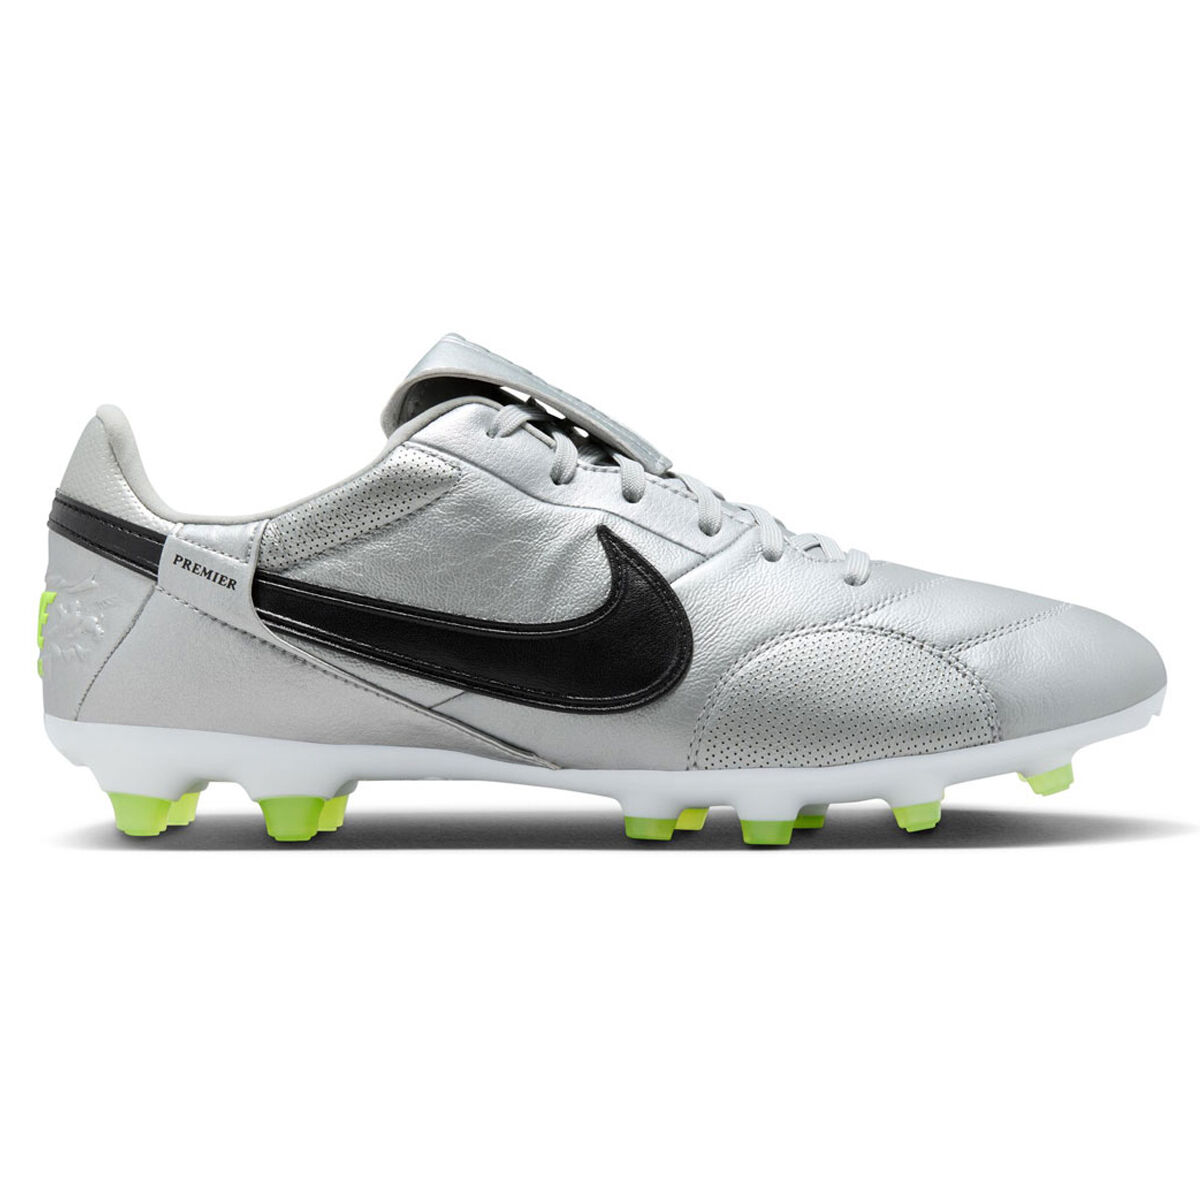 Nike Premier 3 Football Boots | Rebel Sport